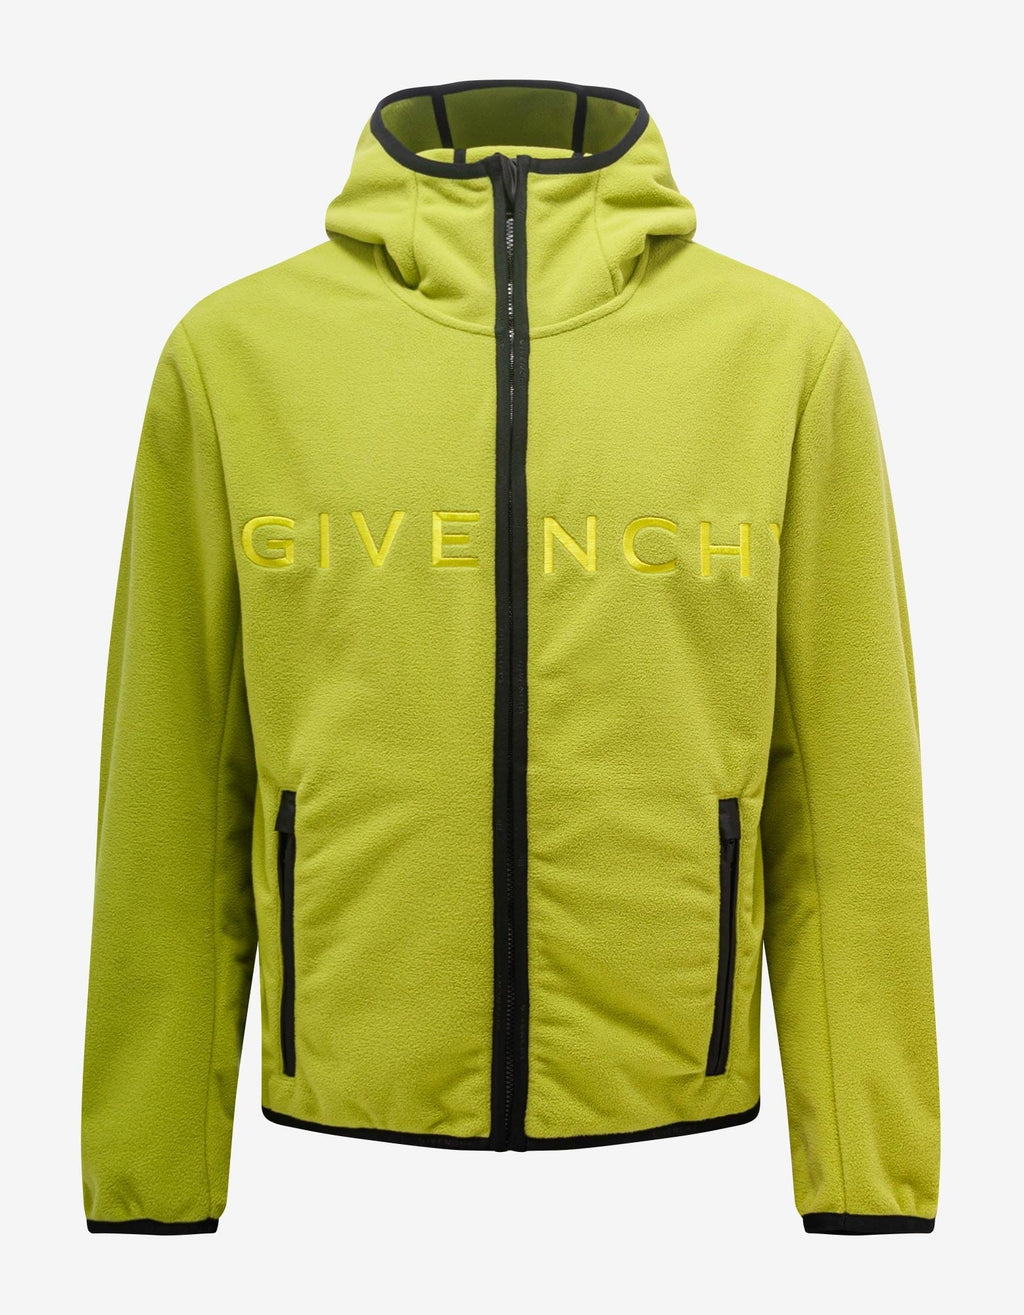 Givenchy Givenchy Citrus Green Fleece Jacket